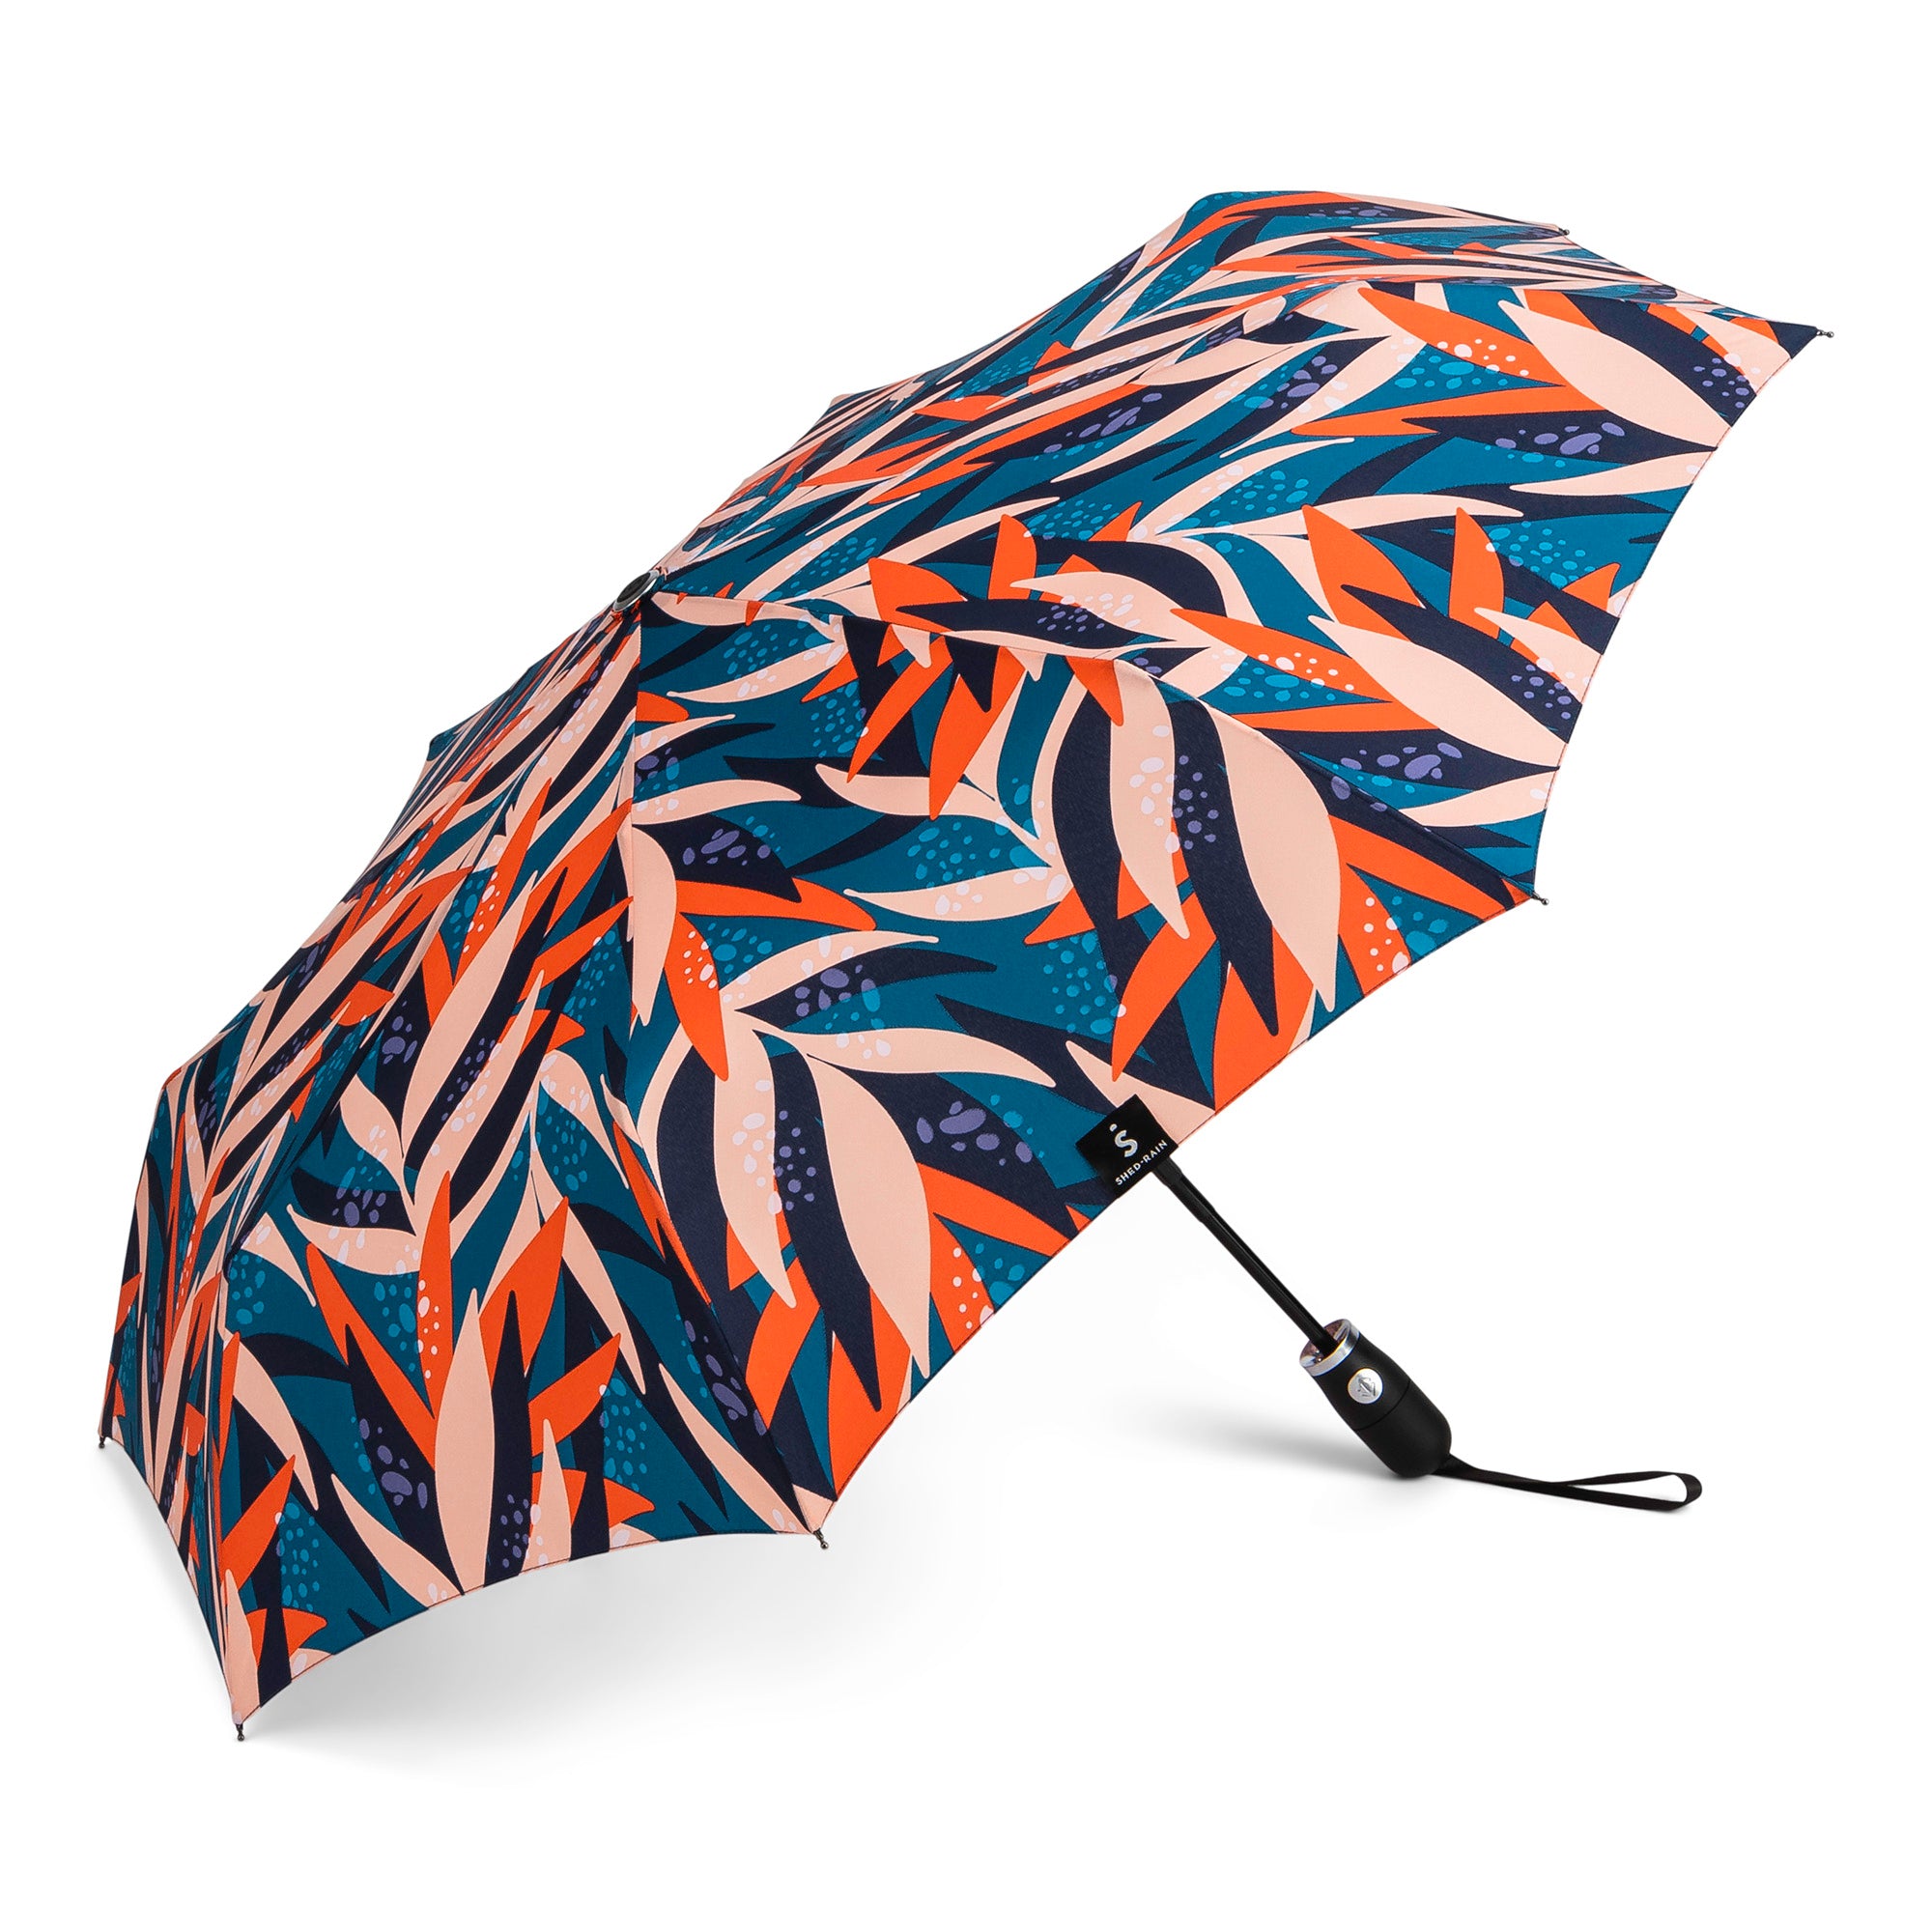 Auto Open Auto Close Compact Umbrella in tropical inspired pattern - 2472 